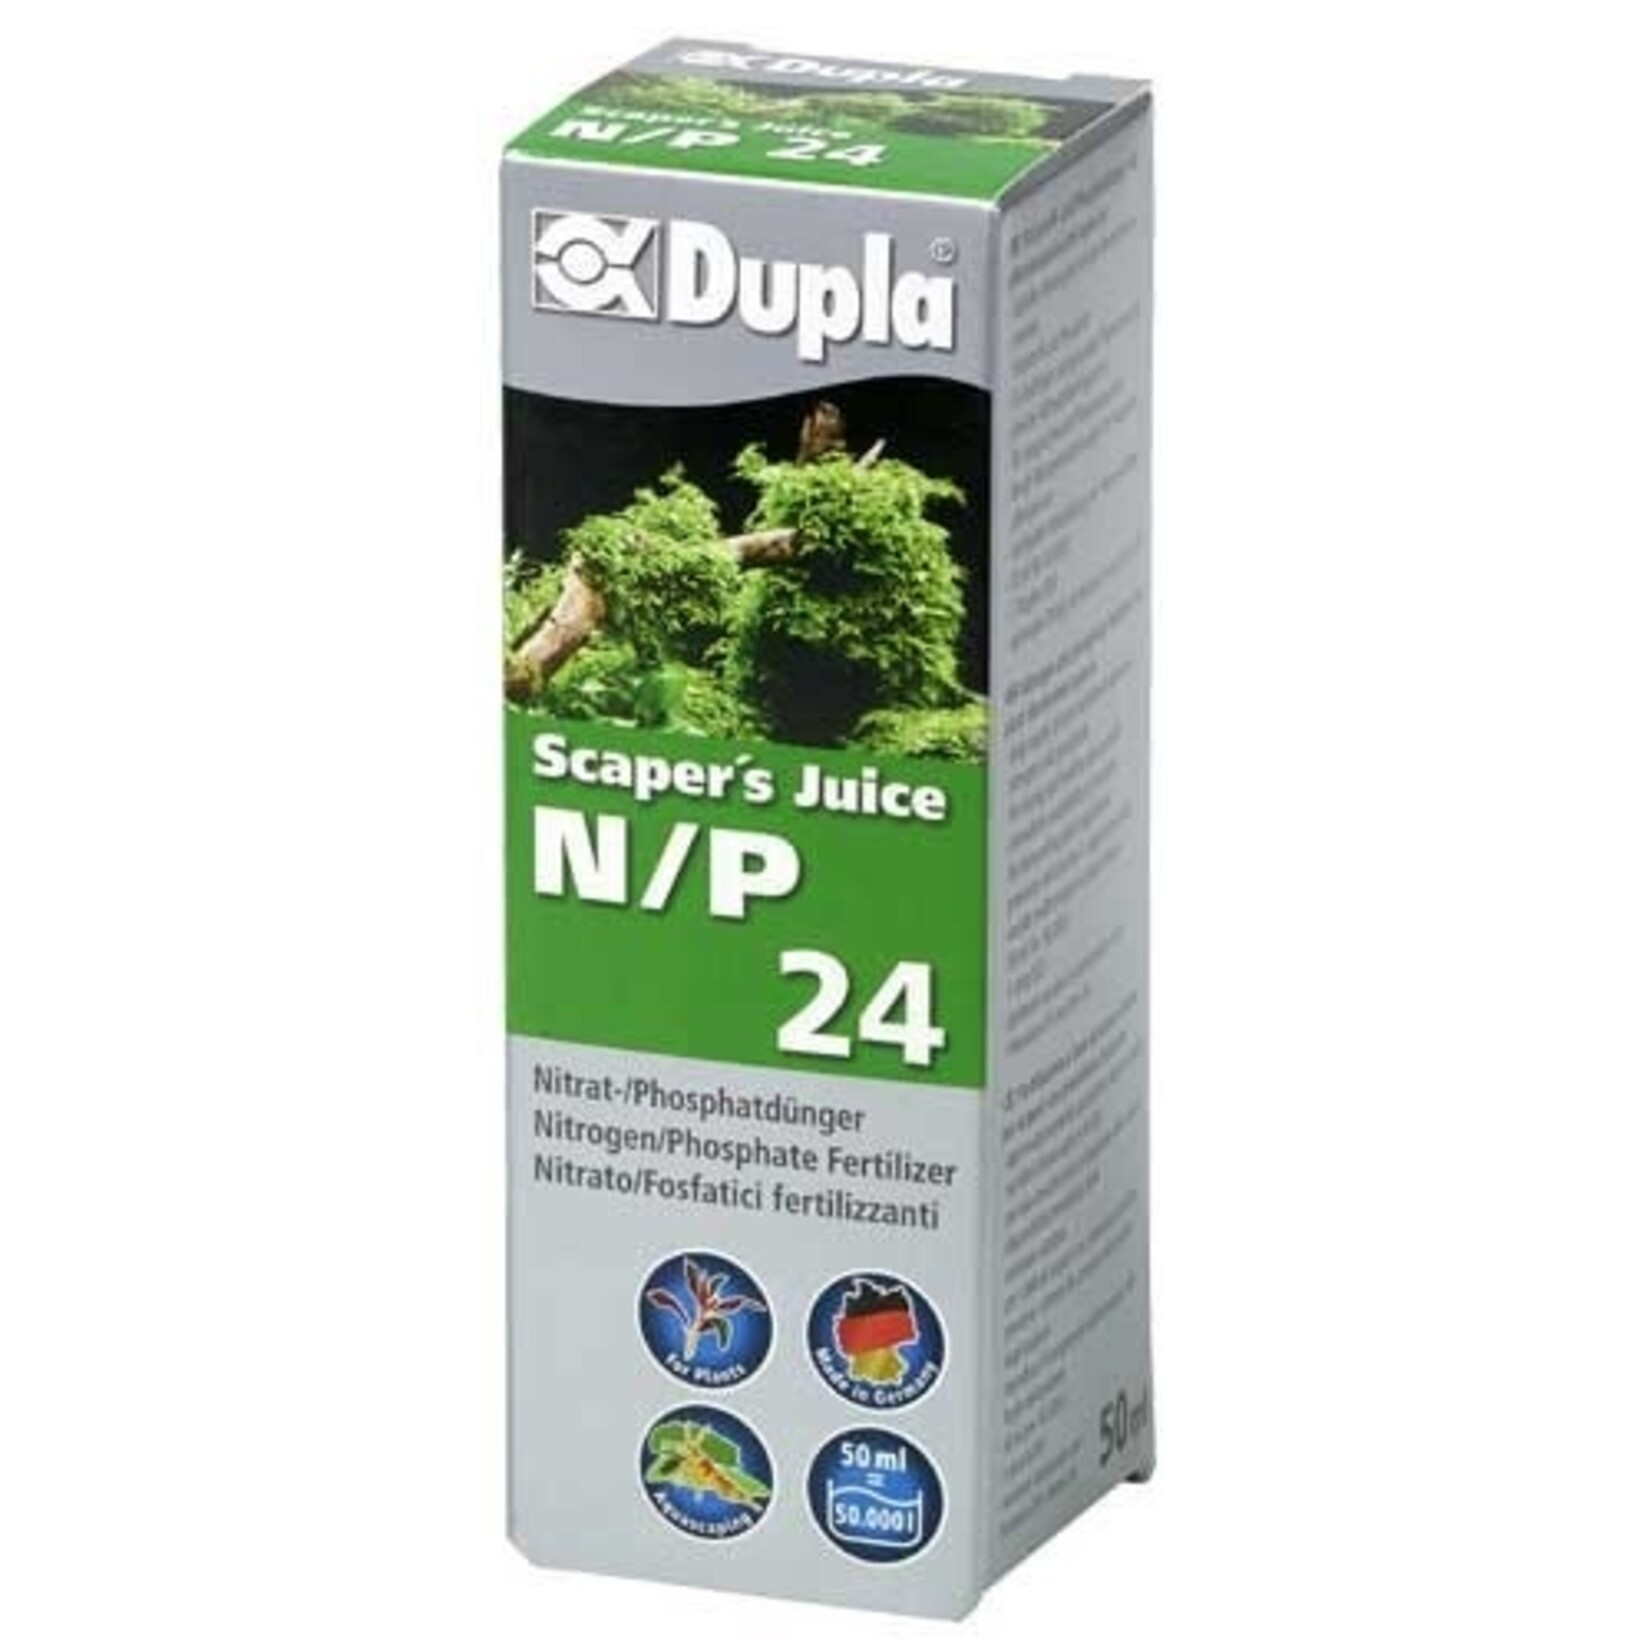 Dupla Scaper's juice n/p dünger 24 50 ml